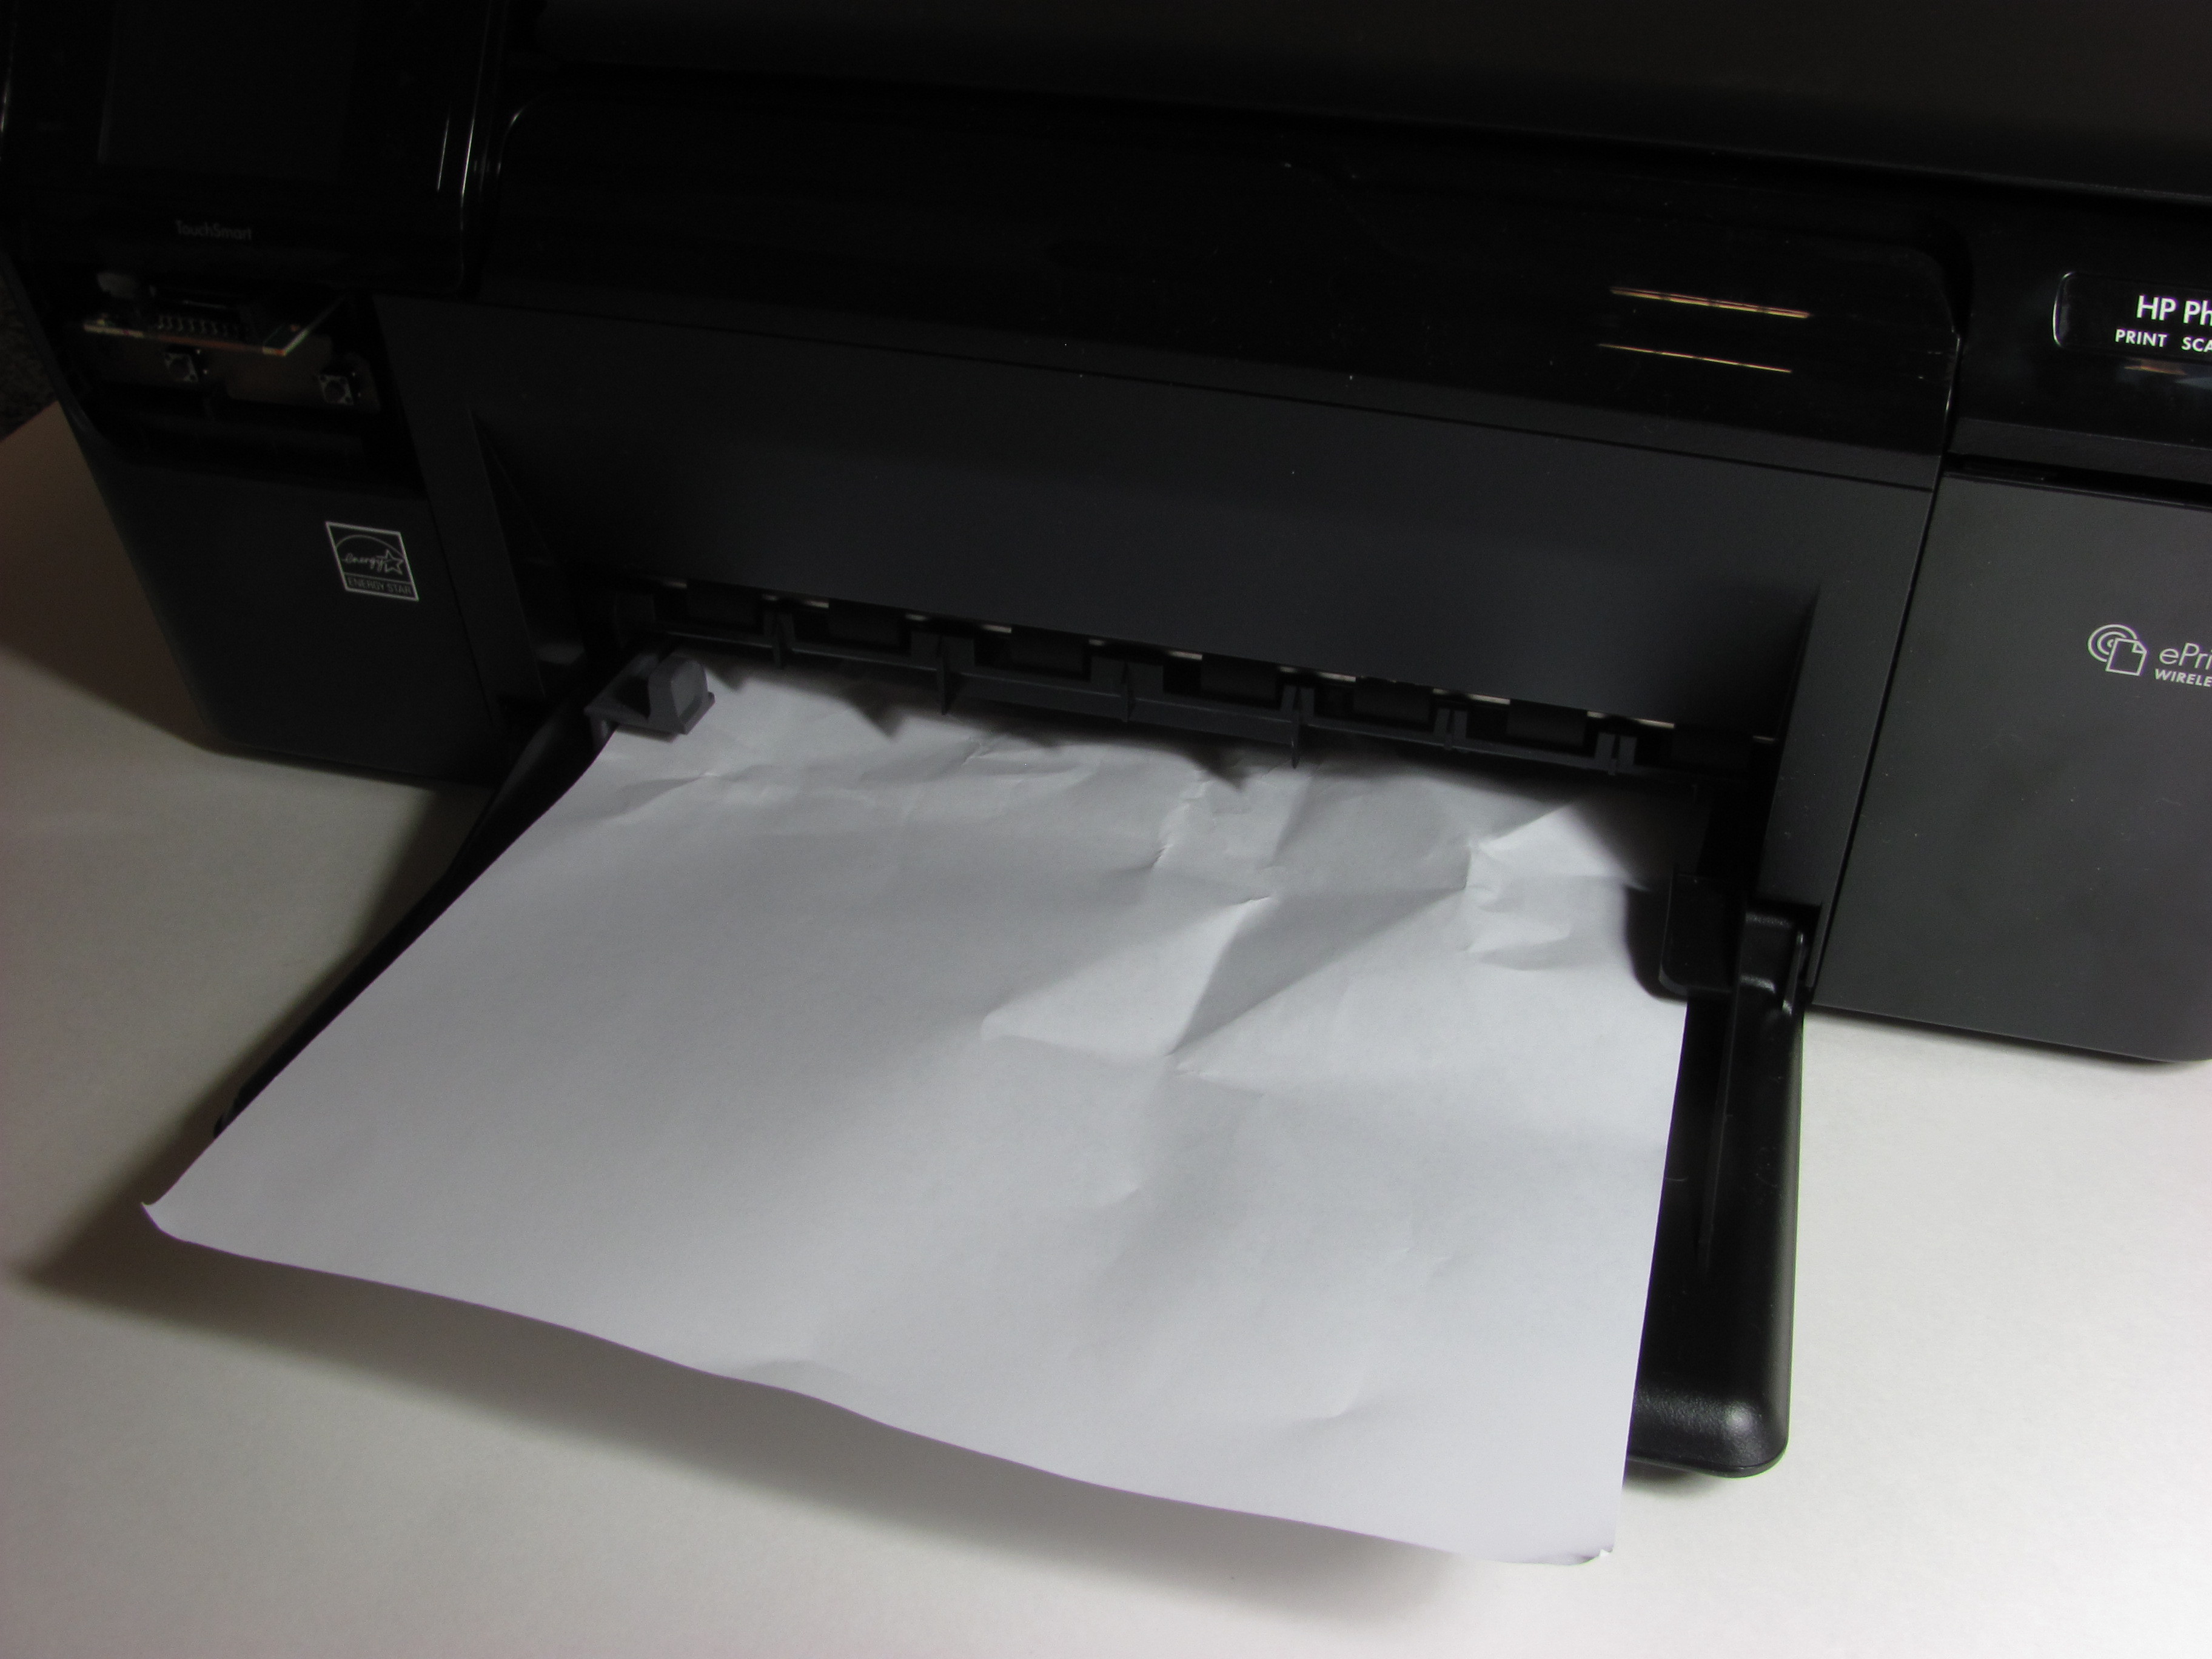 Printer Paper Jams: Causes, Solution, & Prevention - Inkjet Blog